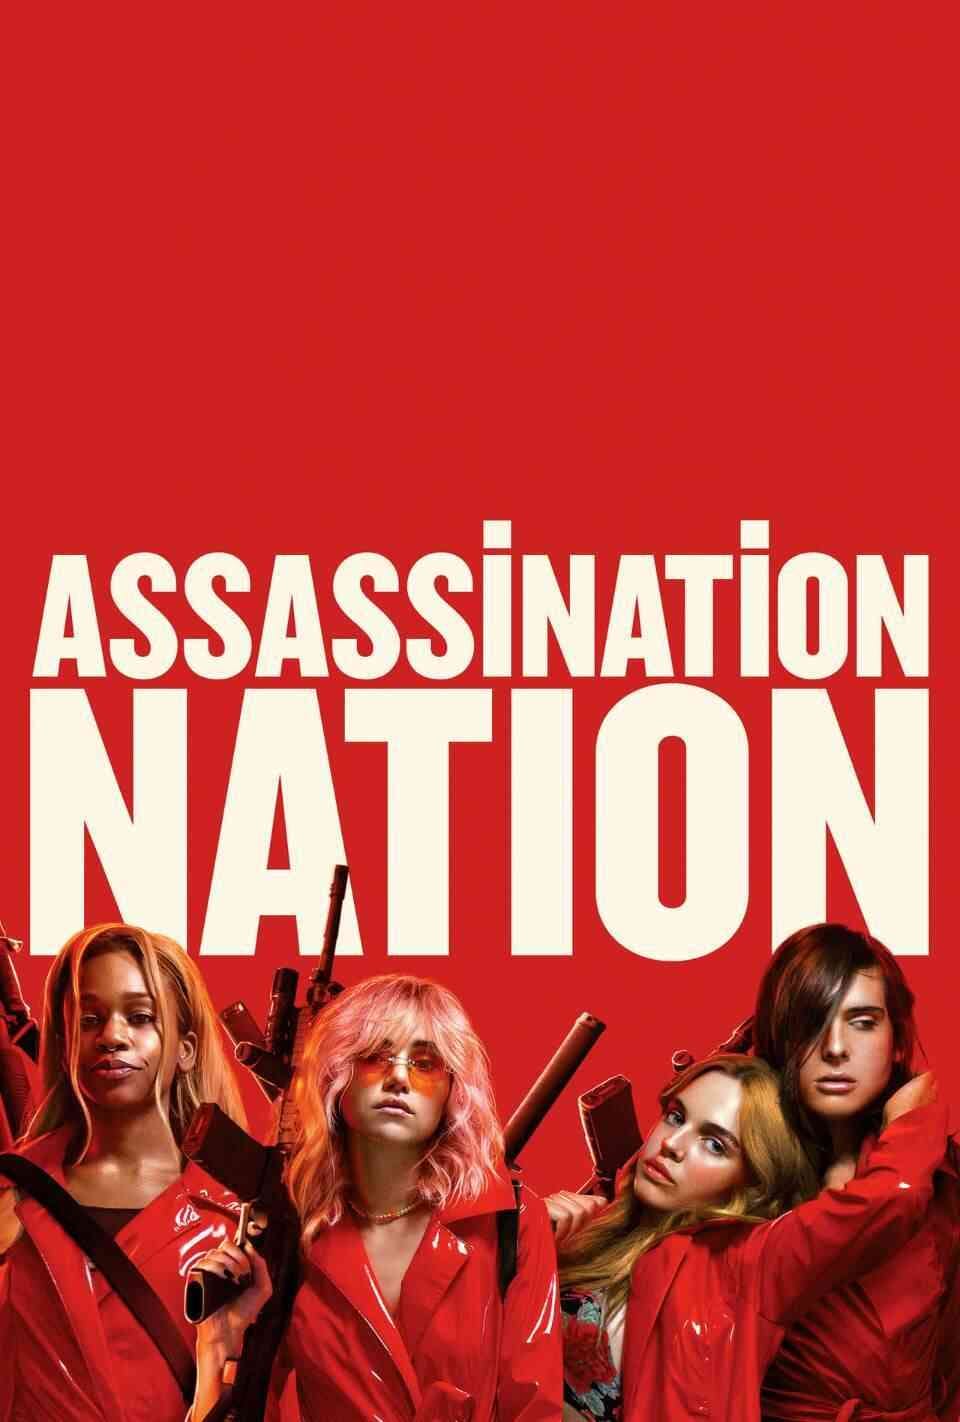 Read Assassination Nation screenplay.